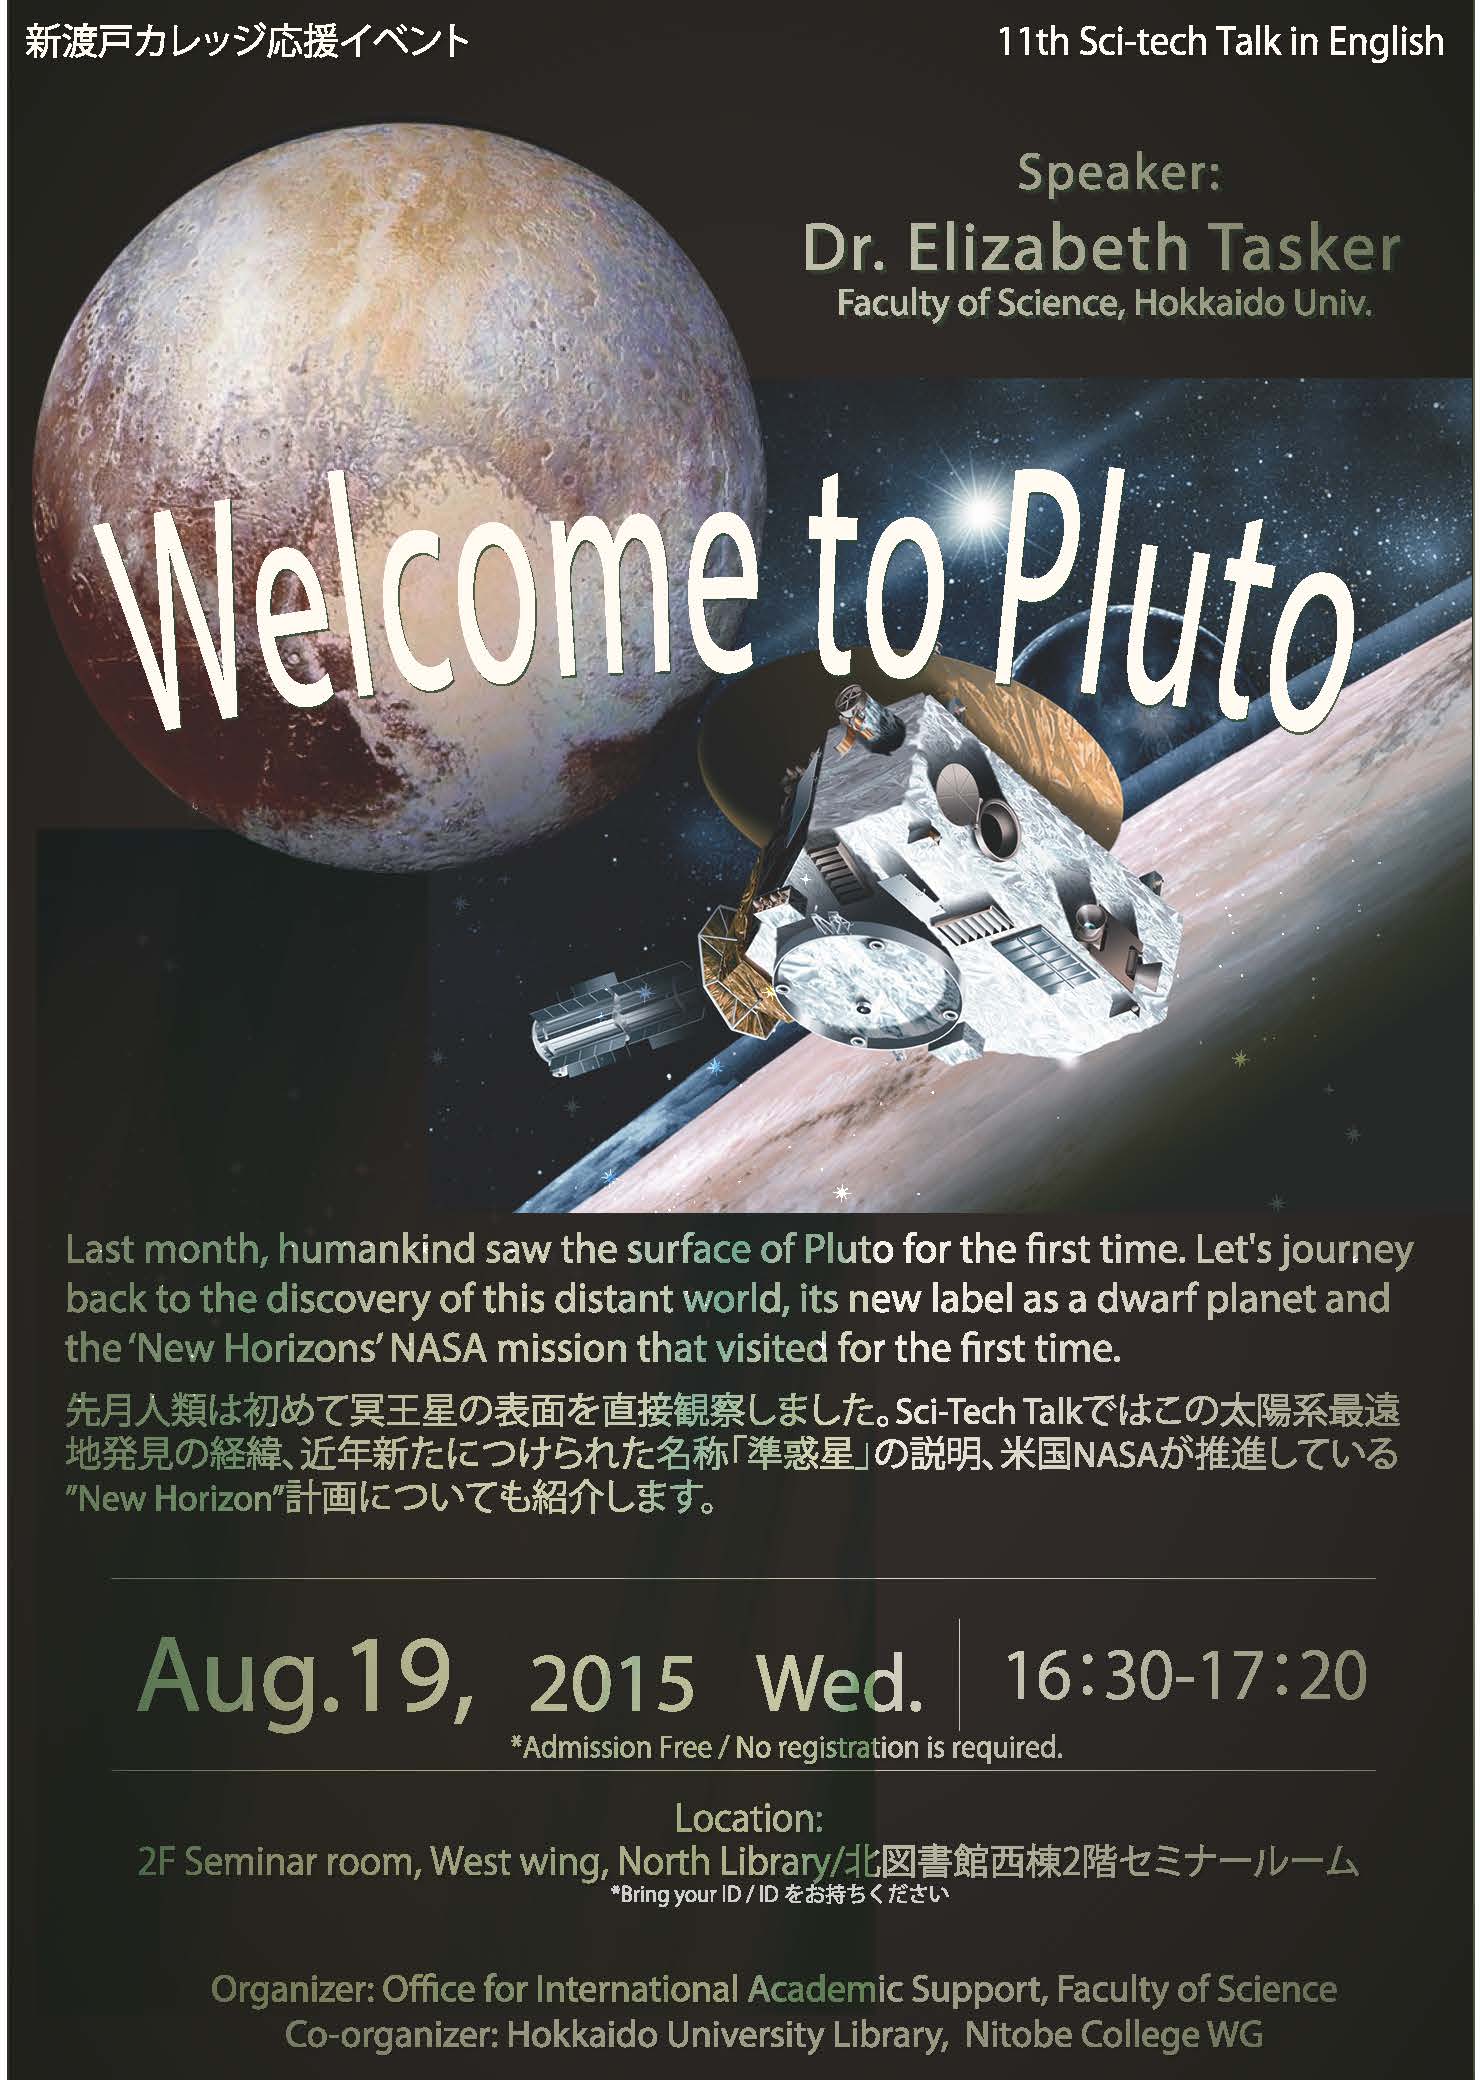 8.19.2015  Sci-tech11_poster